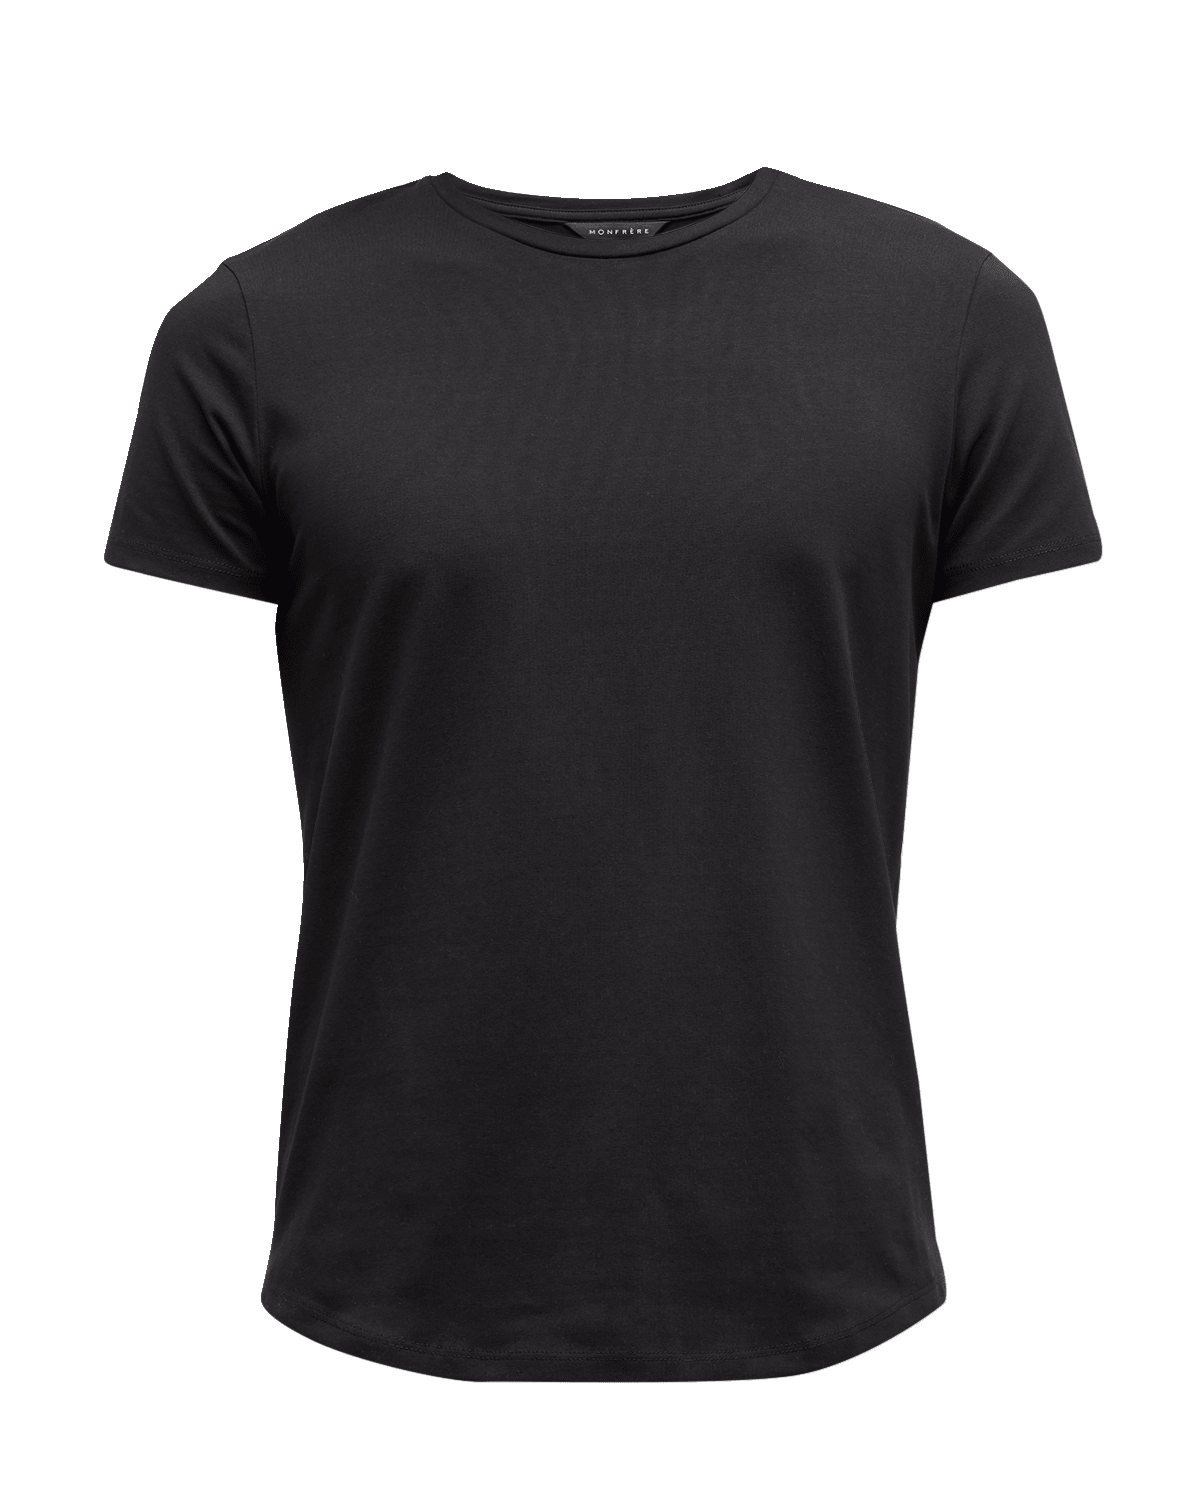 Emporio Armani Men's Tonal Stripe Crewneck T-Shirt | Neiman Marcus